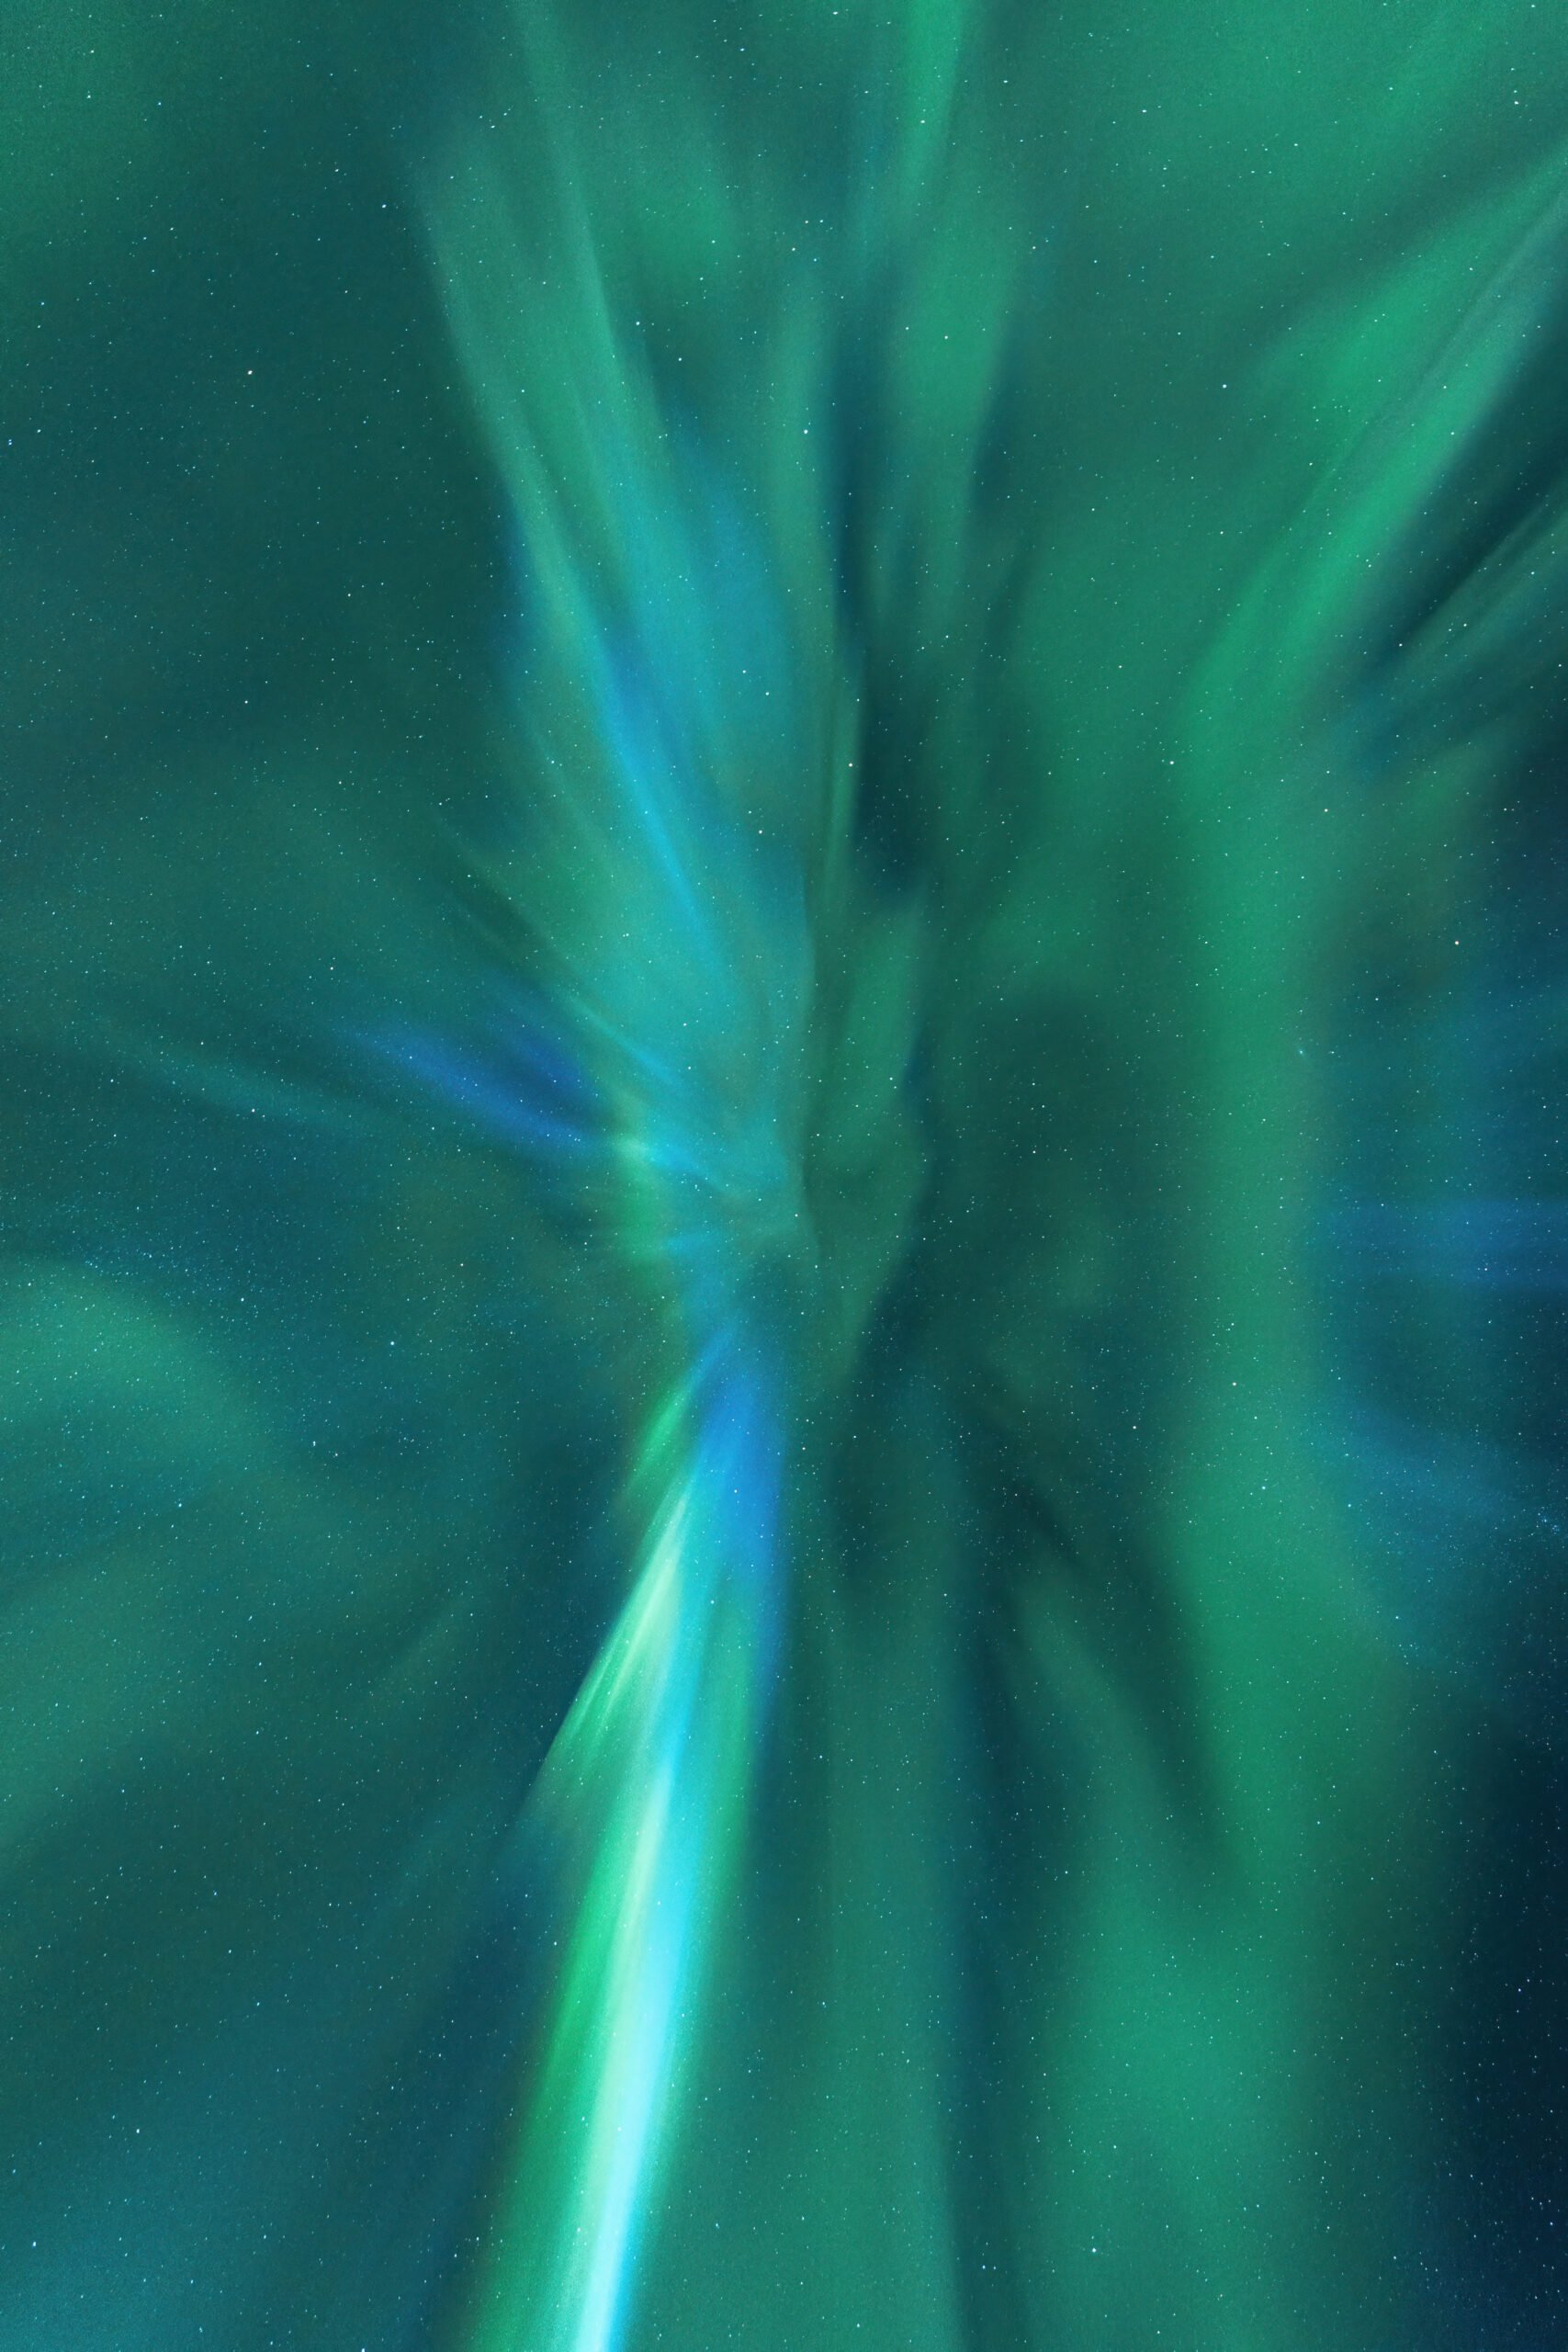 Corona de Aurora Boreal — Islandia (Copy)